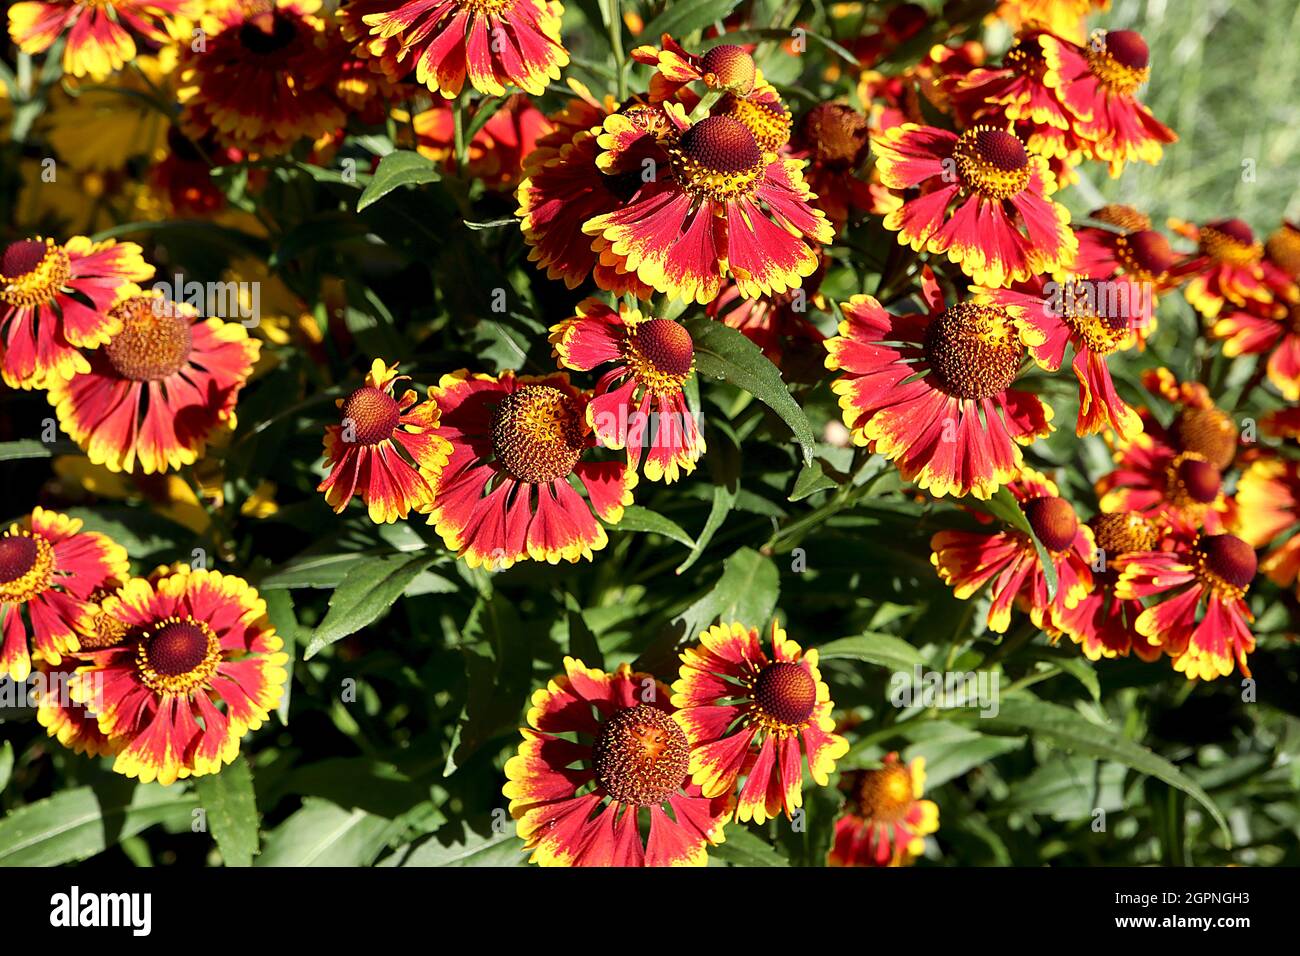 Helenium autumnale ‘Biedermeier’ sneezeweed Biedermeier – red flowers with yellow tips,  September, England, UK Stock Photo